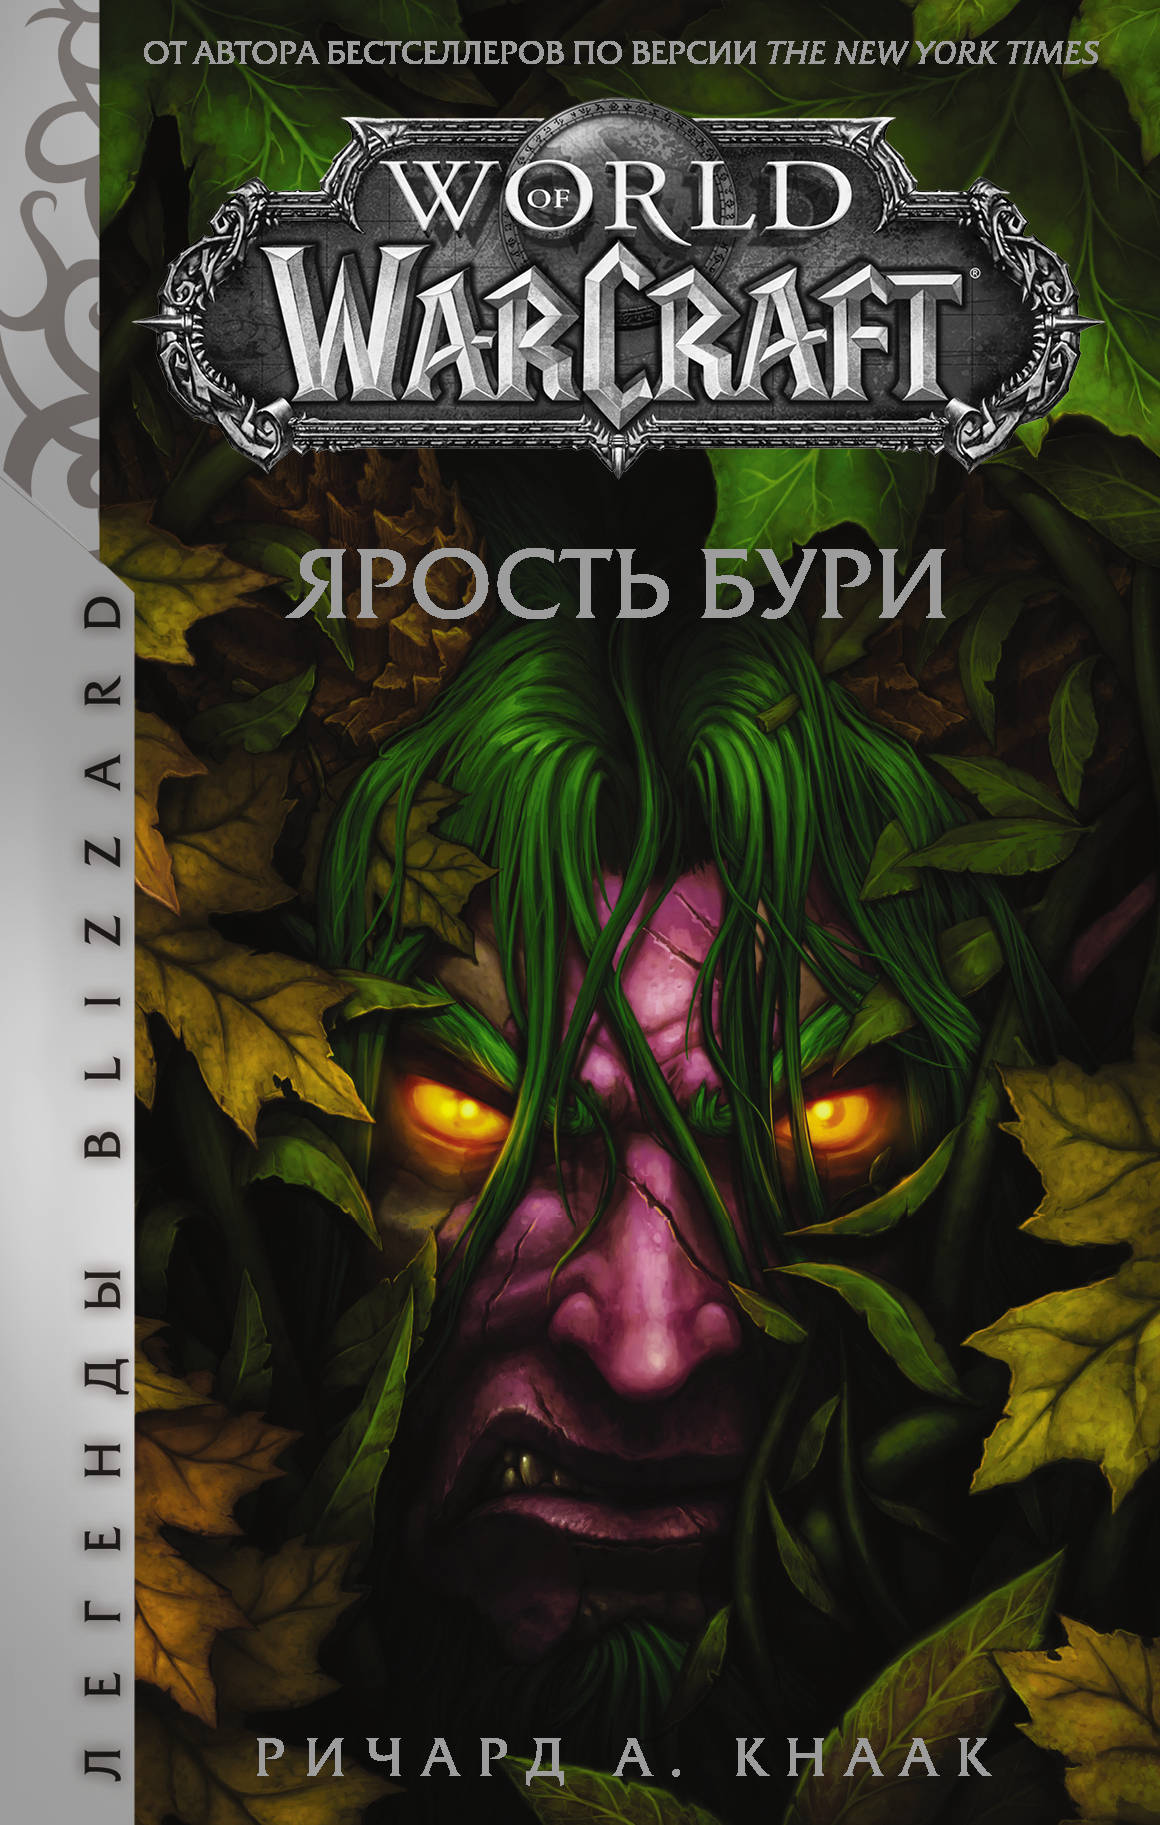 World of Warcraft.  